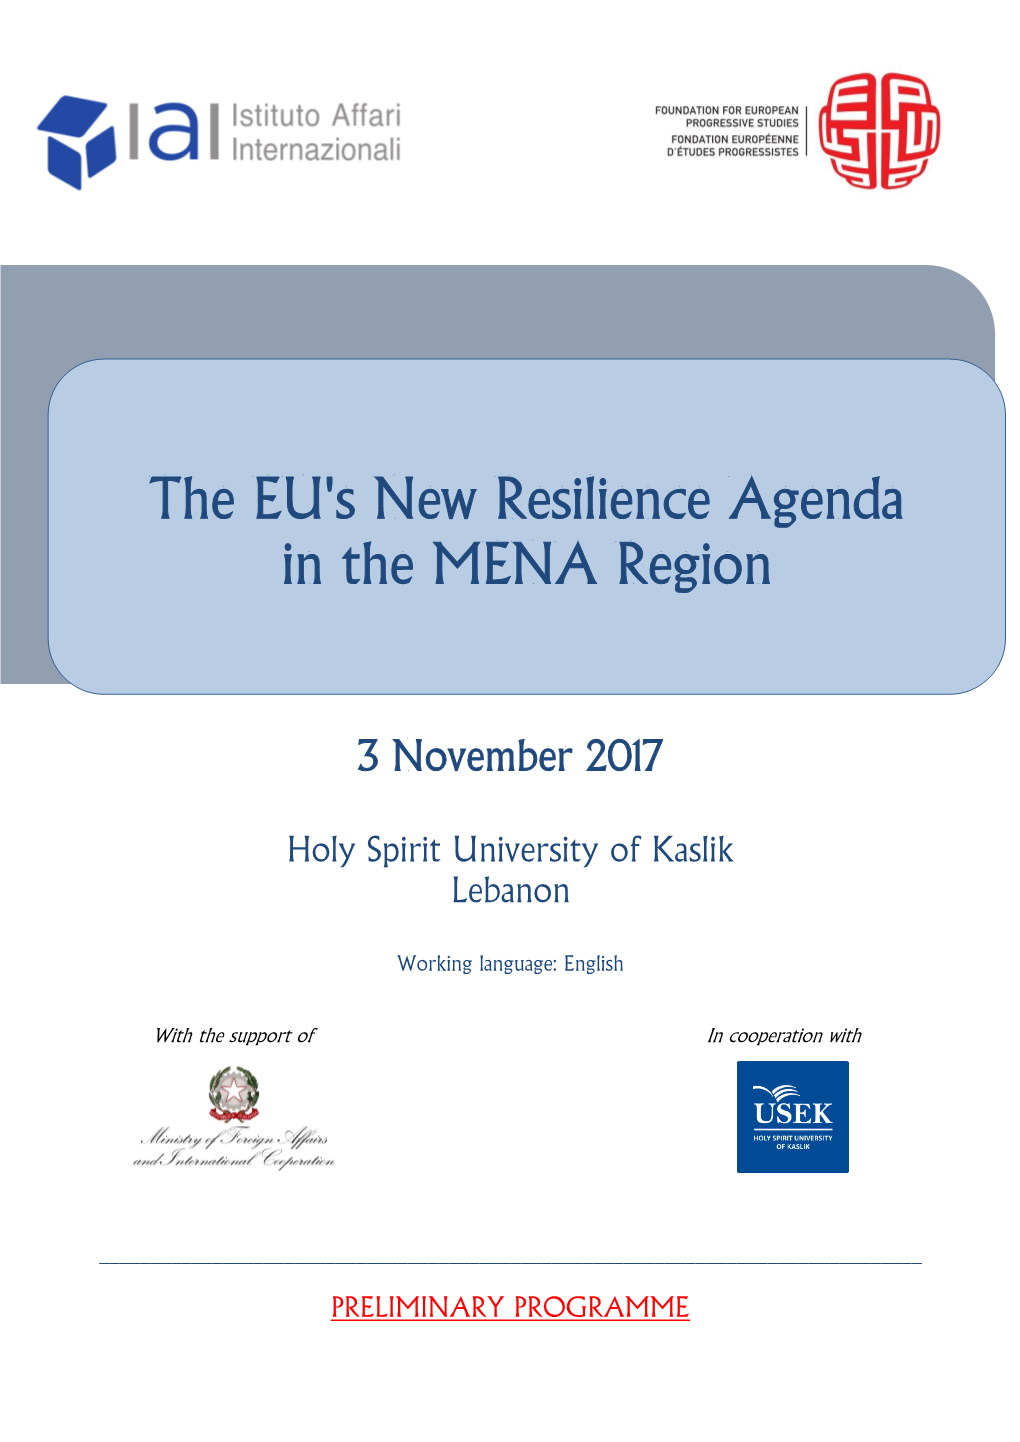 The EU's New Resilience Agenda in the MENA Region